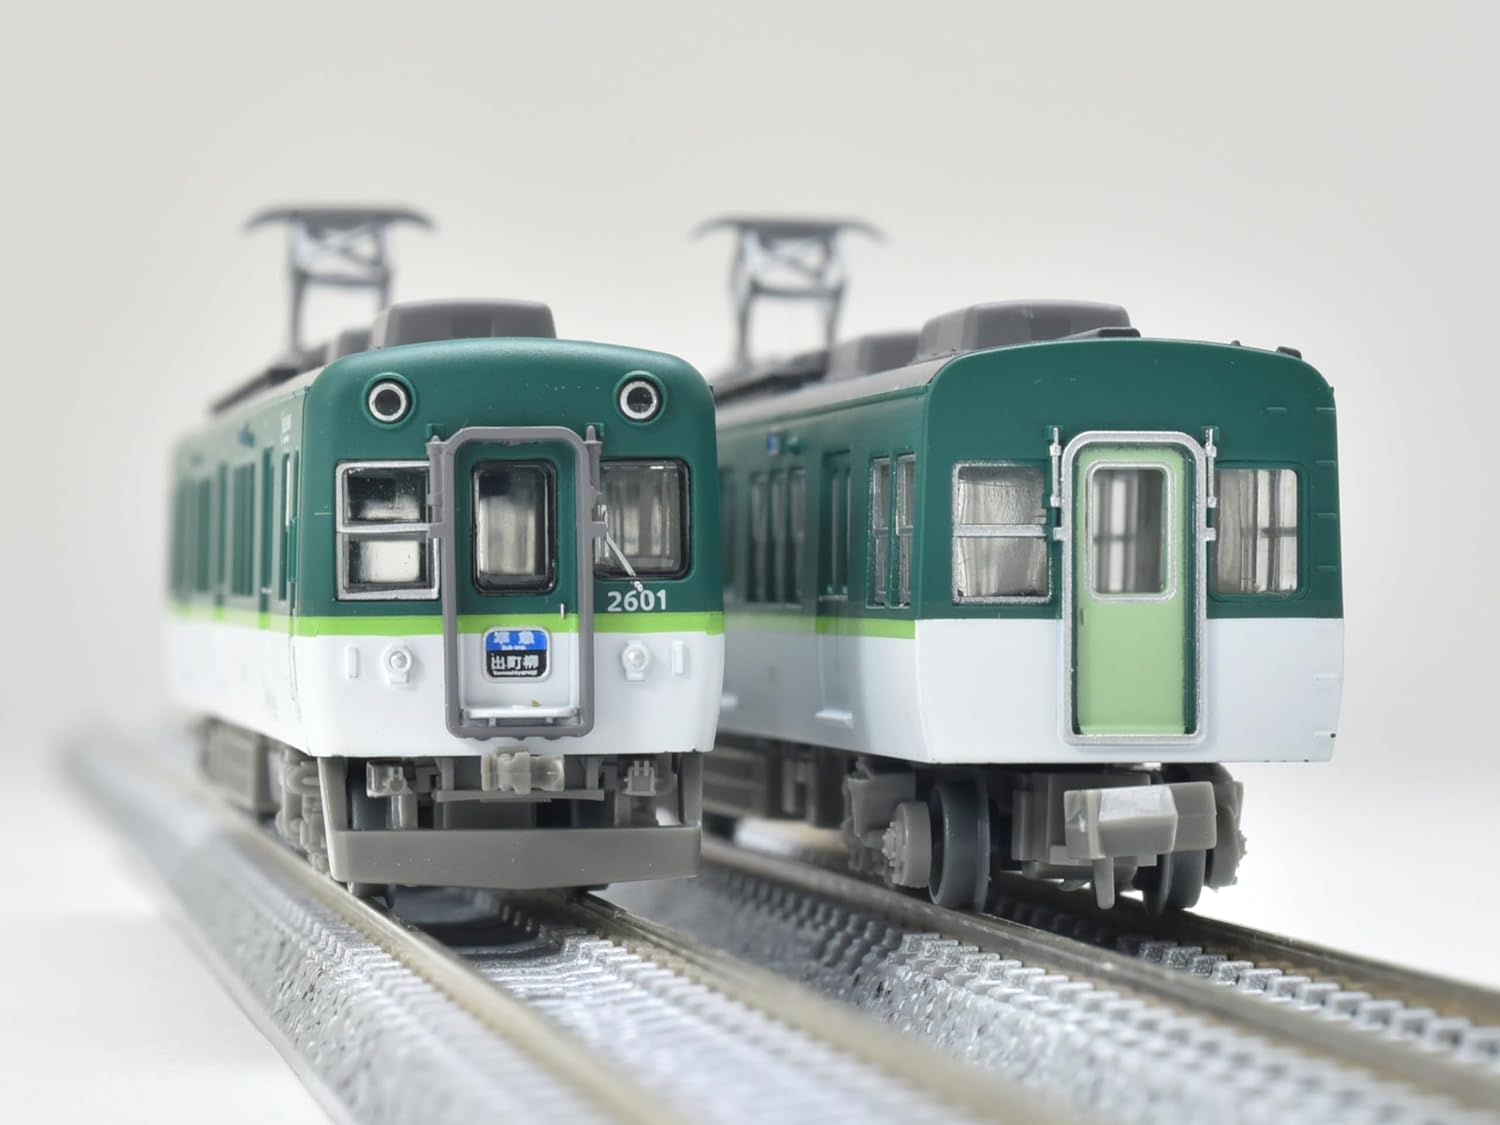 Tomytec Railway Collection MT05 Keihan Electric Railway Set of 2 - BanzaiHobby